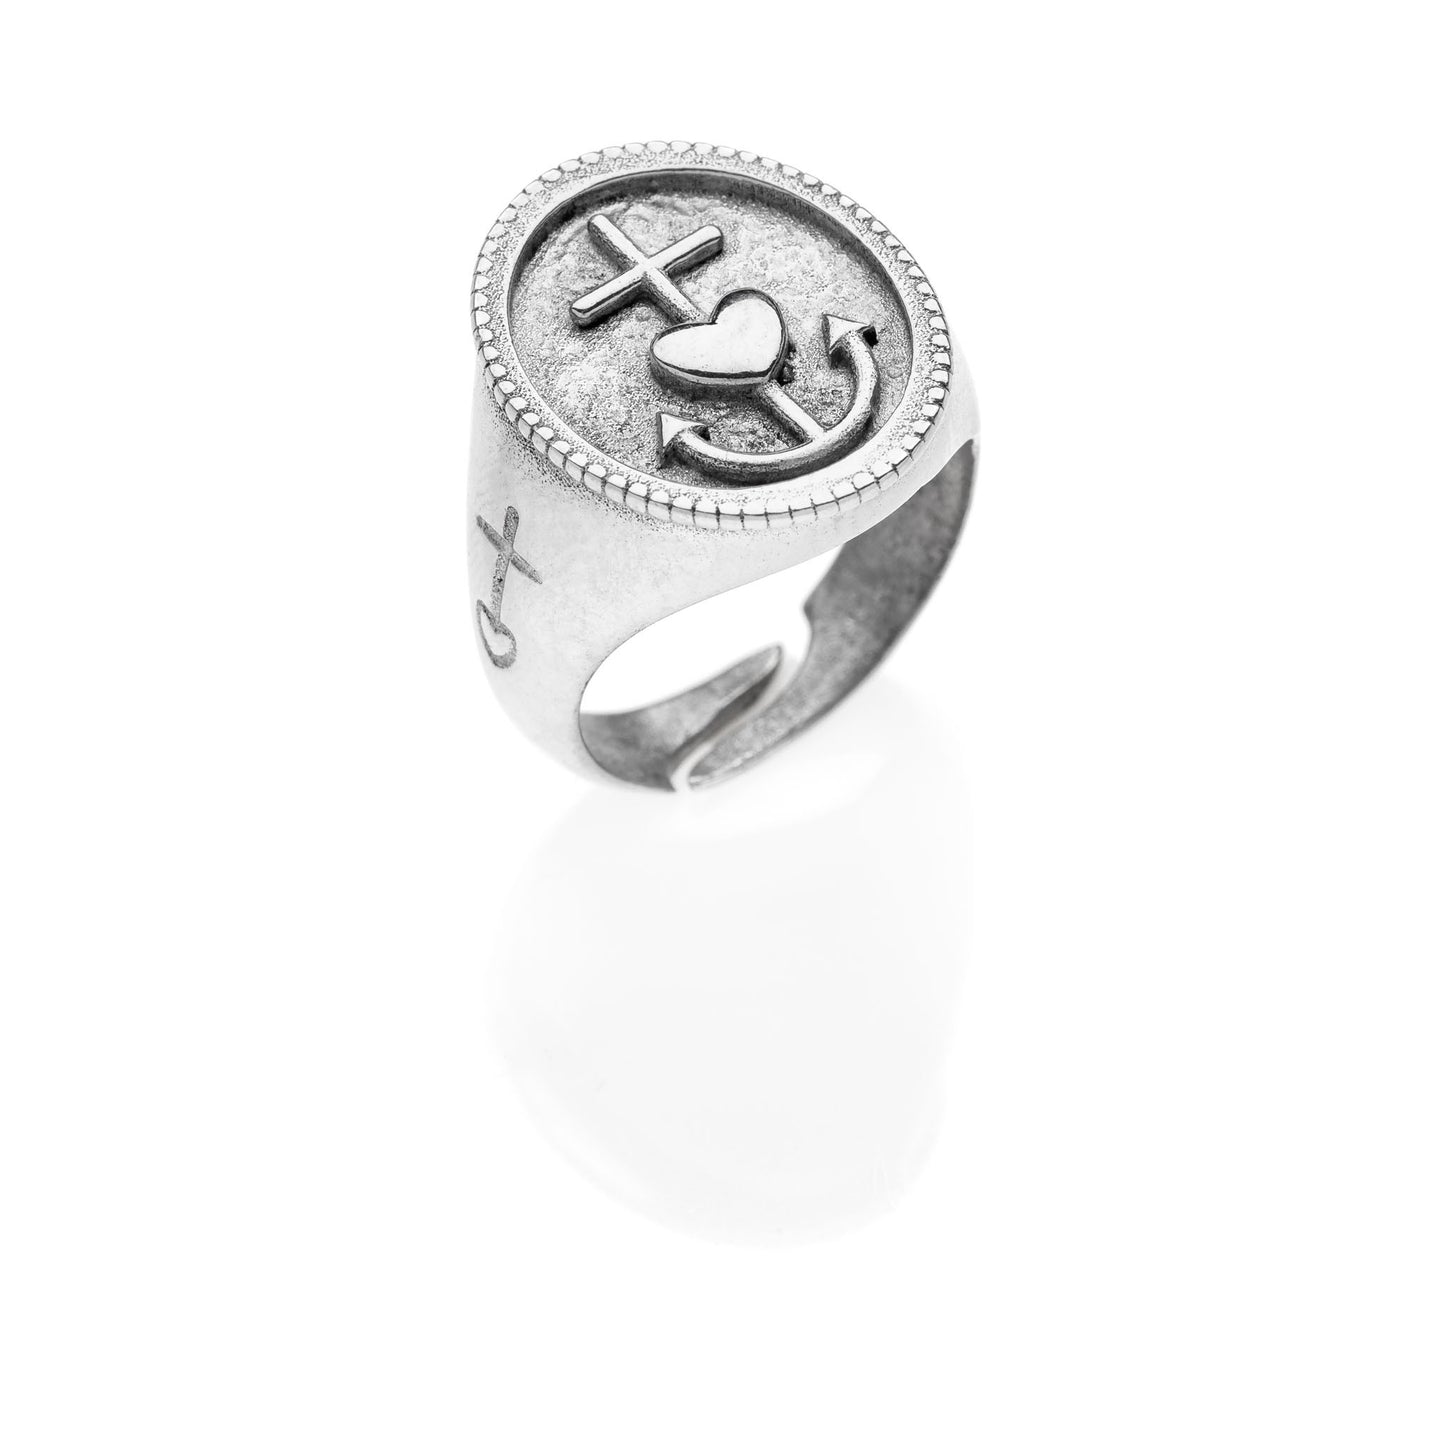 PAUL Hope Faith Charity chevalier silver ring #MS095AN - MARIA SALVADOR